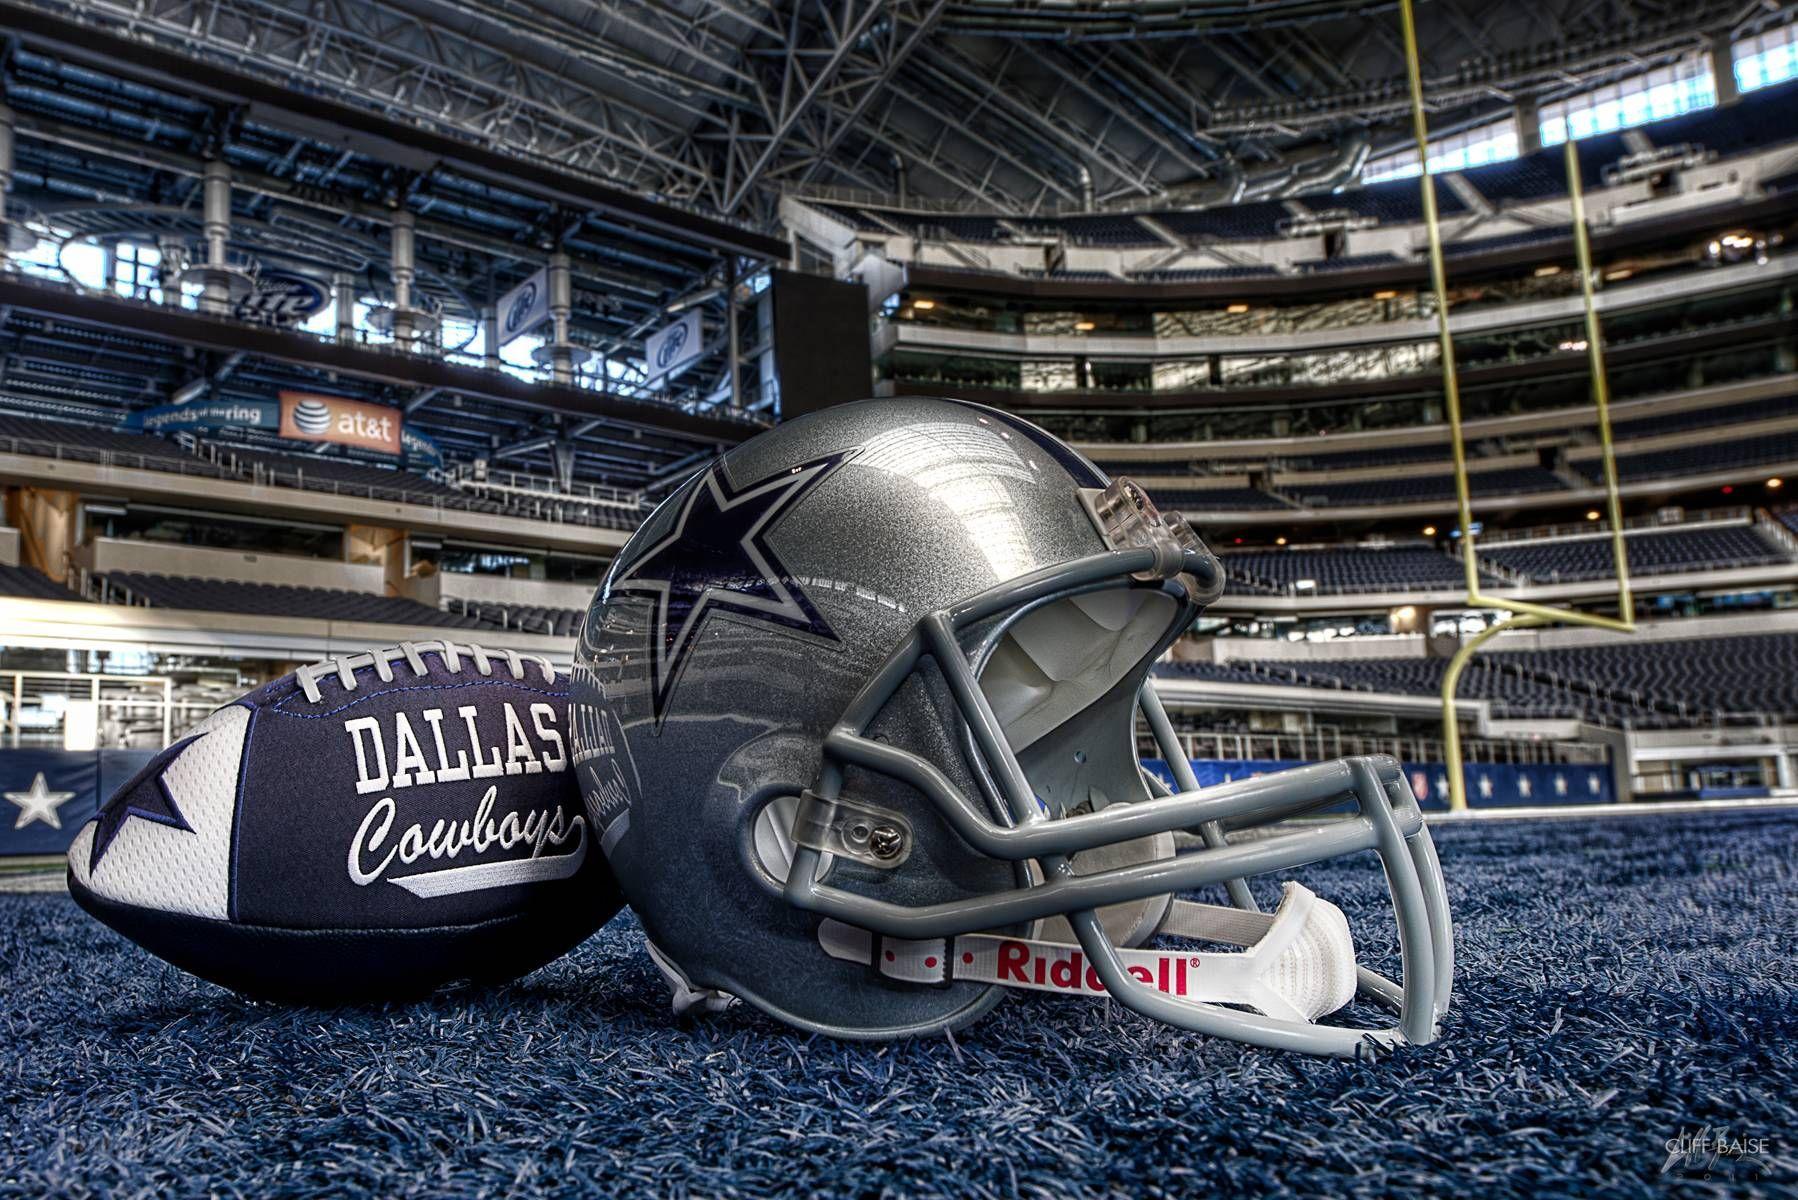 Dallas Cowboys Background For Desktop. Best Games